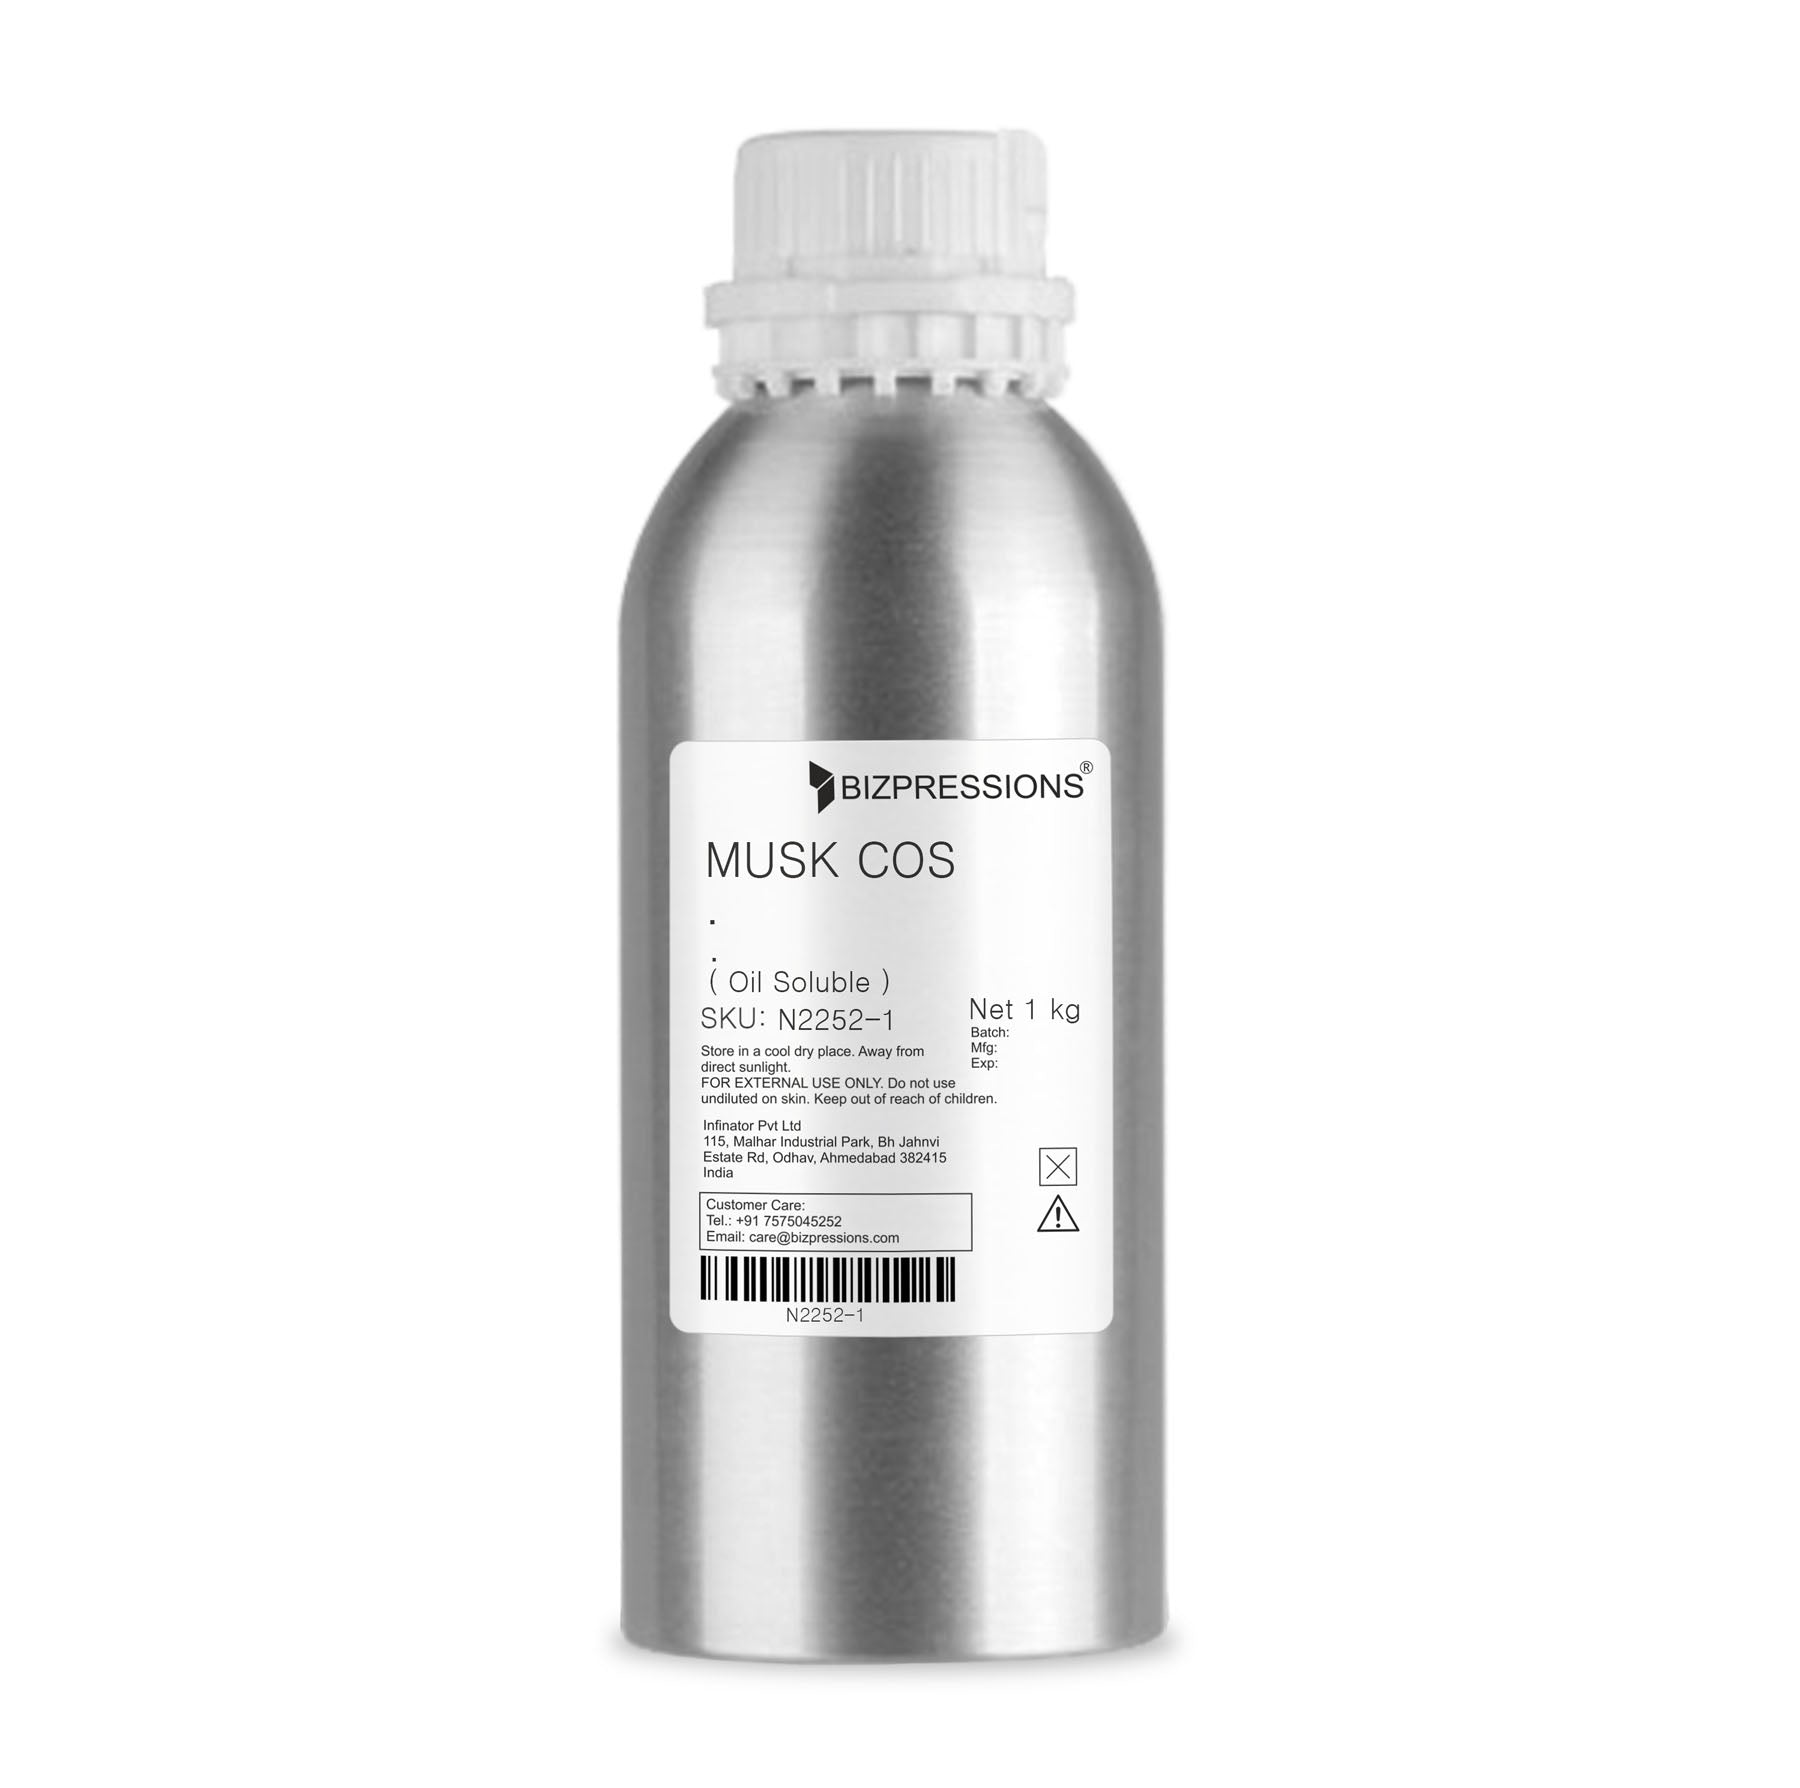 MUSK COS - Fragrance ( Oil Soluble ) - 1 kg